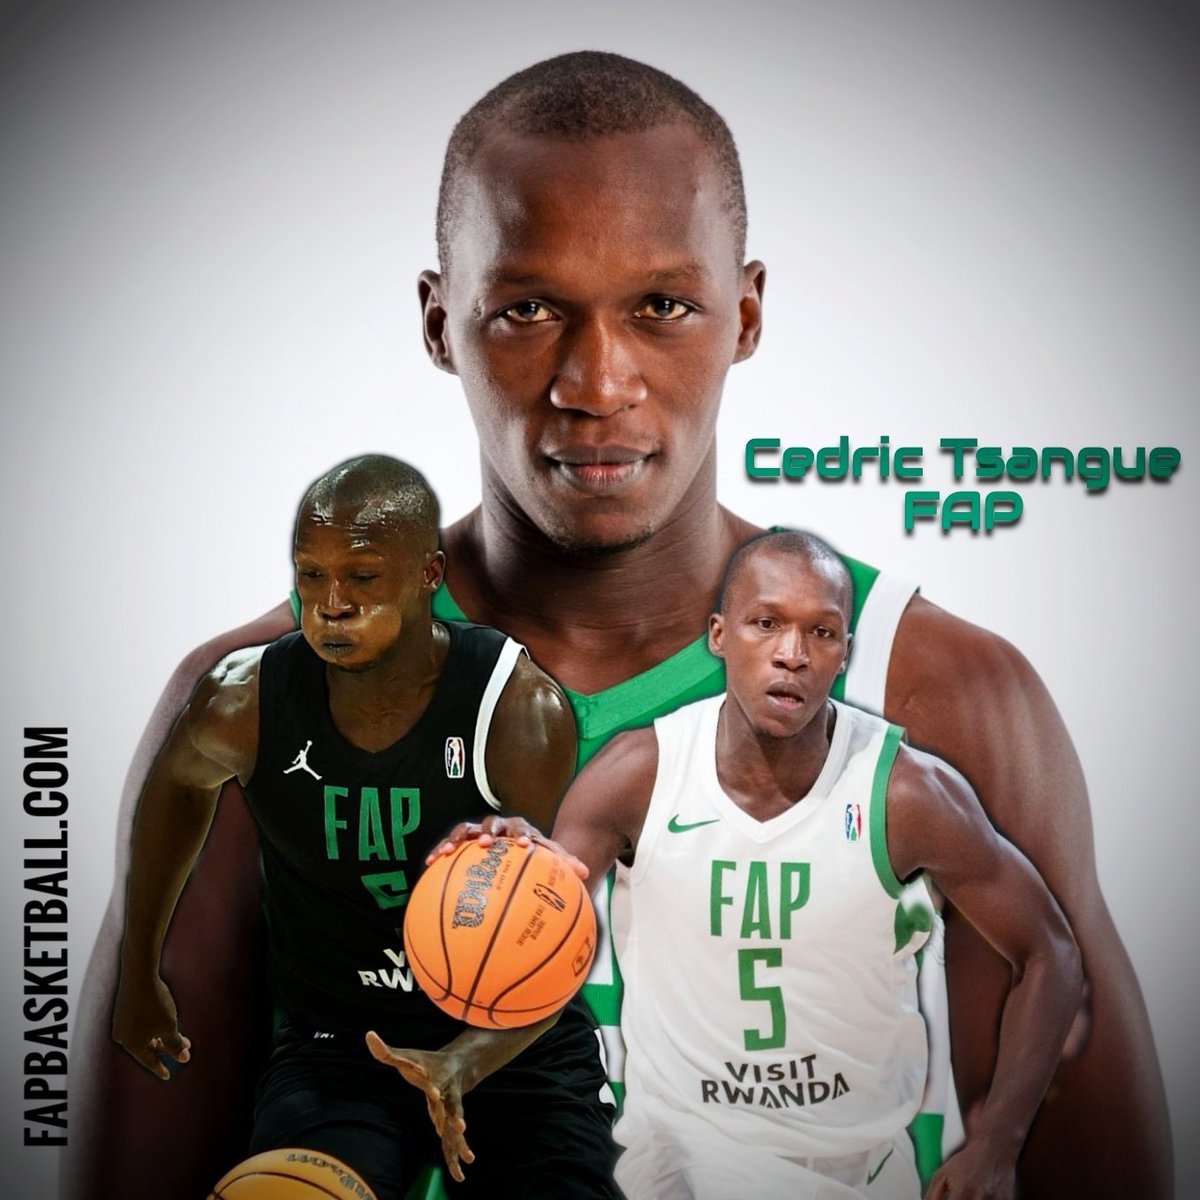 Before the Final 8 of Basketball Africa League in Kigali, Rwanda 🔥 FAP Basketball du Cameroun Officiel to introduce our warriors... @CedricTsangue @MormanDeshaun @BlockMamba4life @theBAL @AfricaNBAFans @belle_fiba @FECABASKET @CapeTownTigers @ZSCOfficial_EN @NjieEnow @CRTV_web